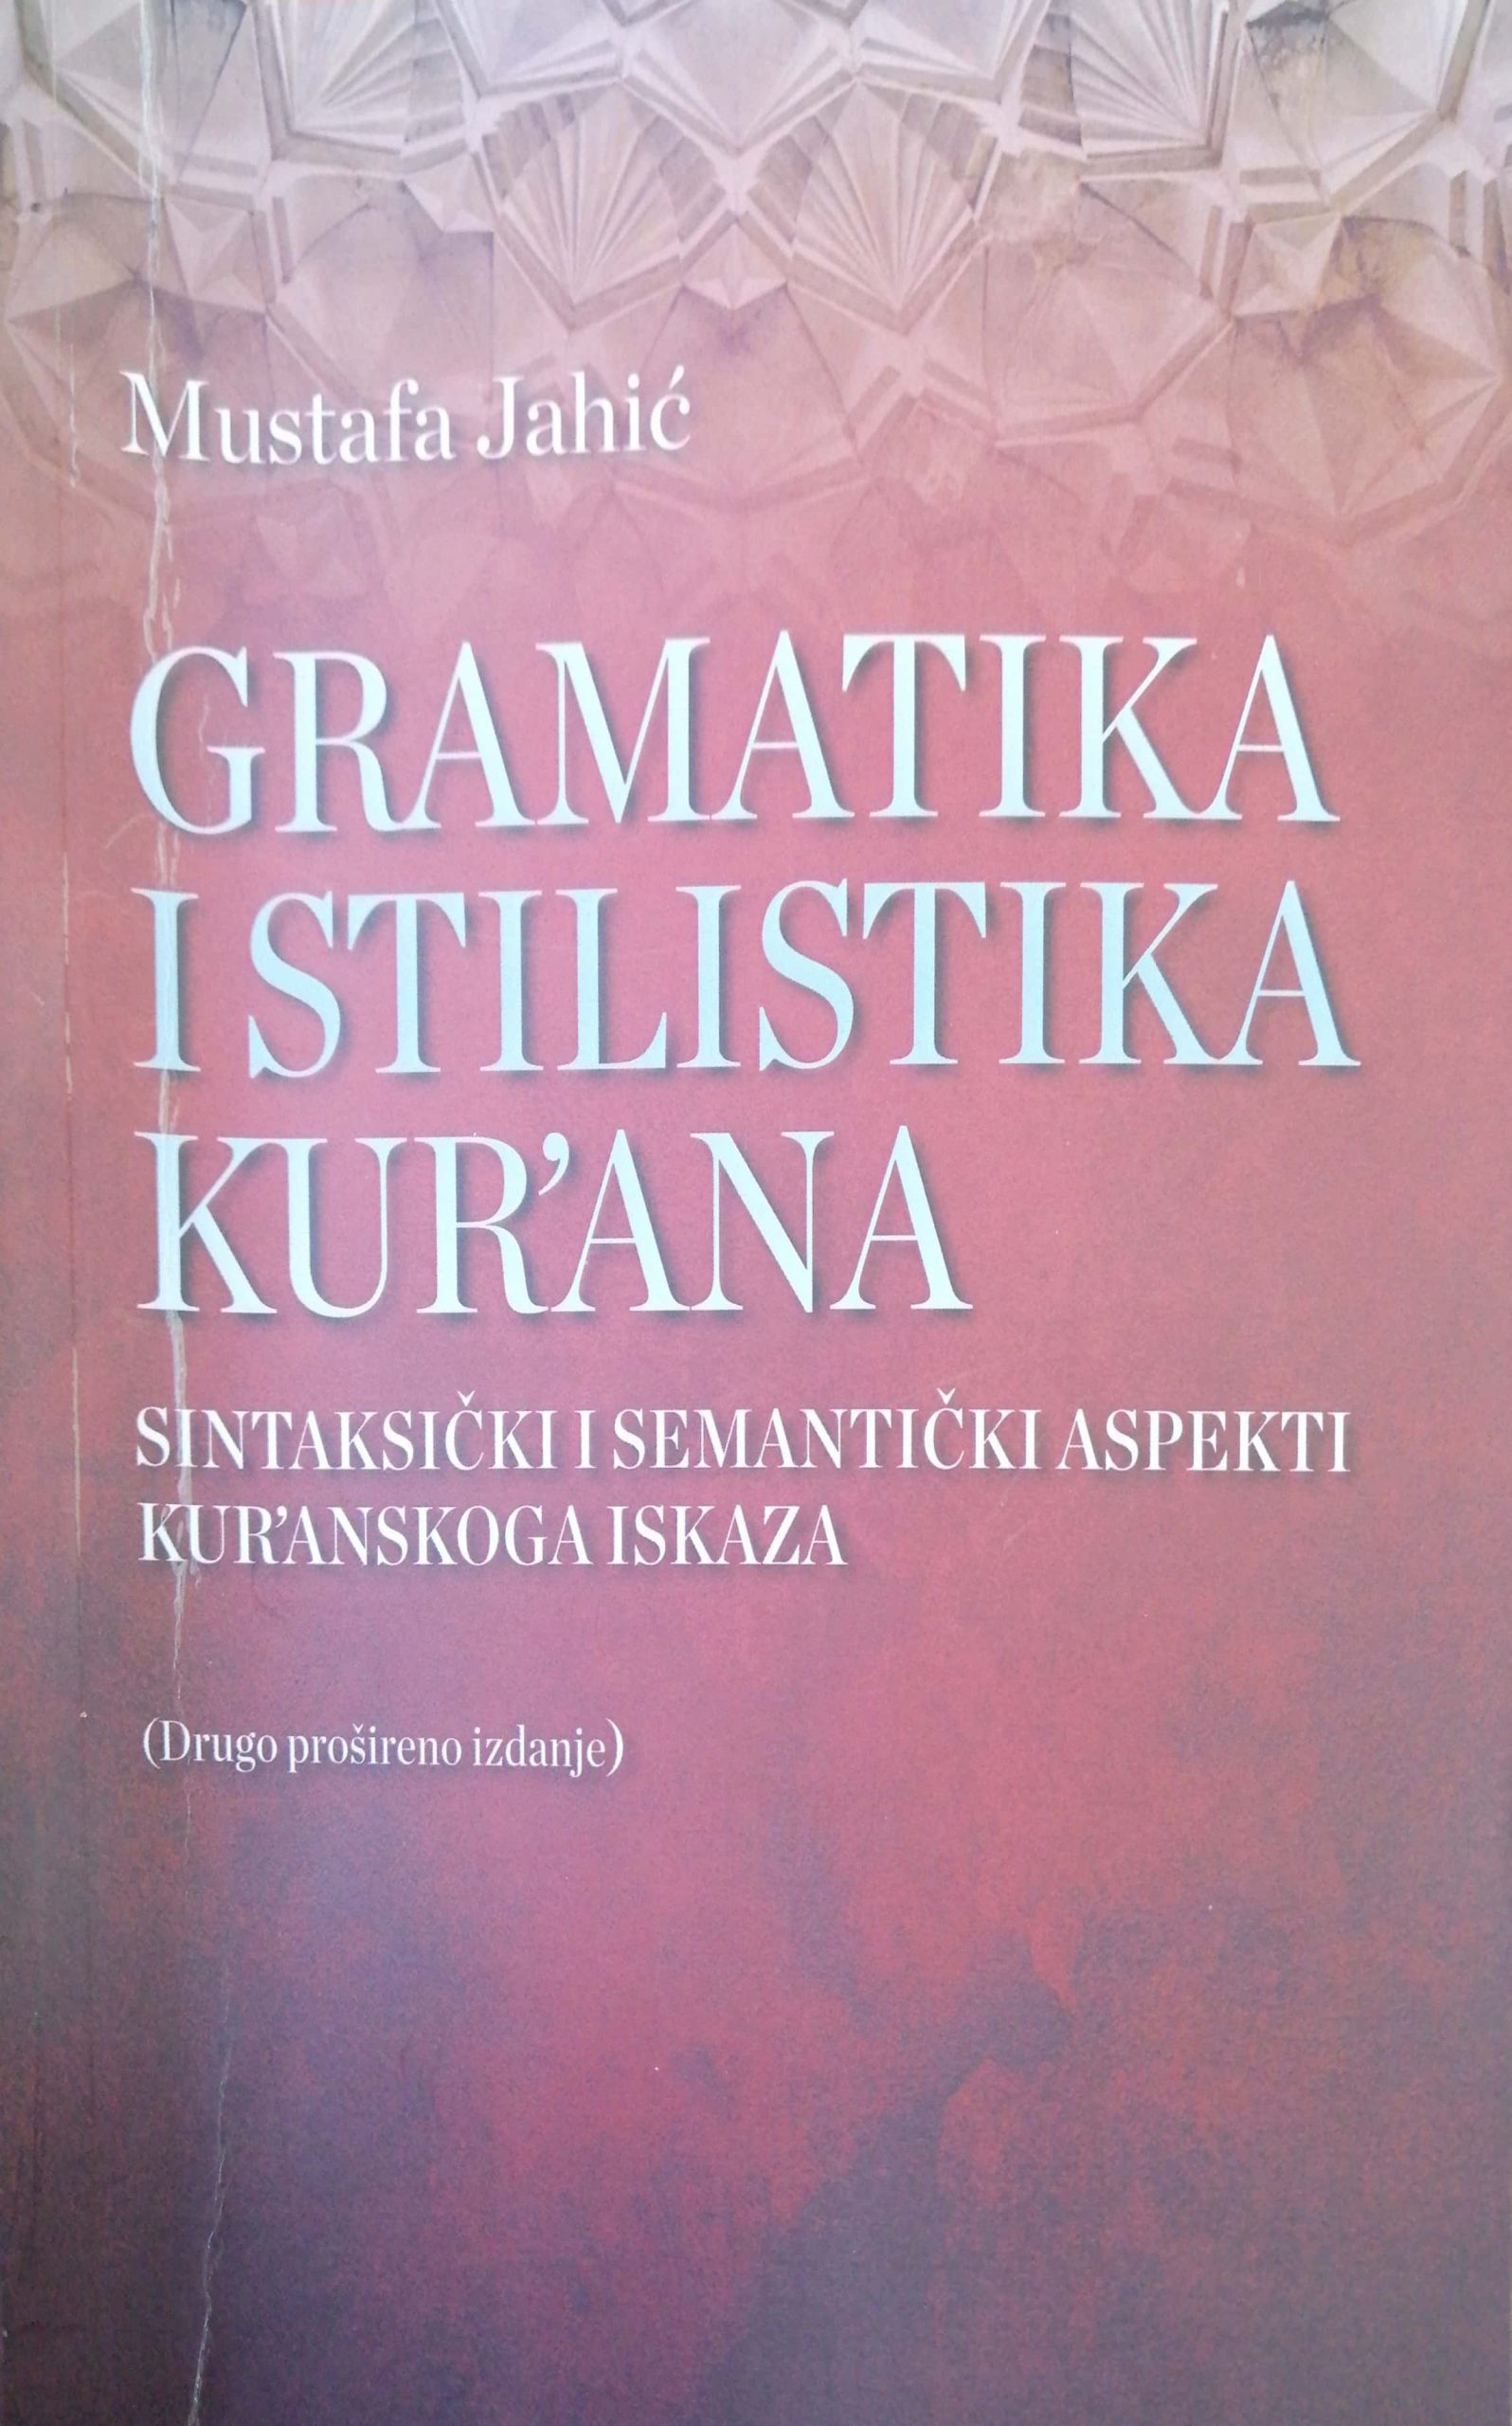 Gramatika i stilistika Kur’ana autor dr. Mustafa Jahić